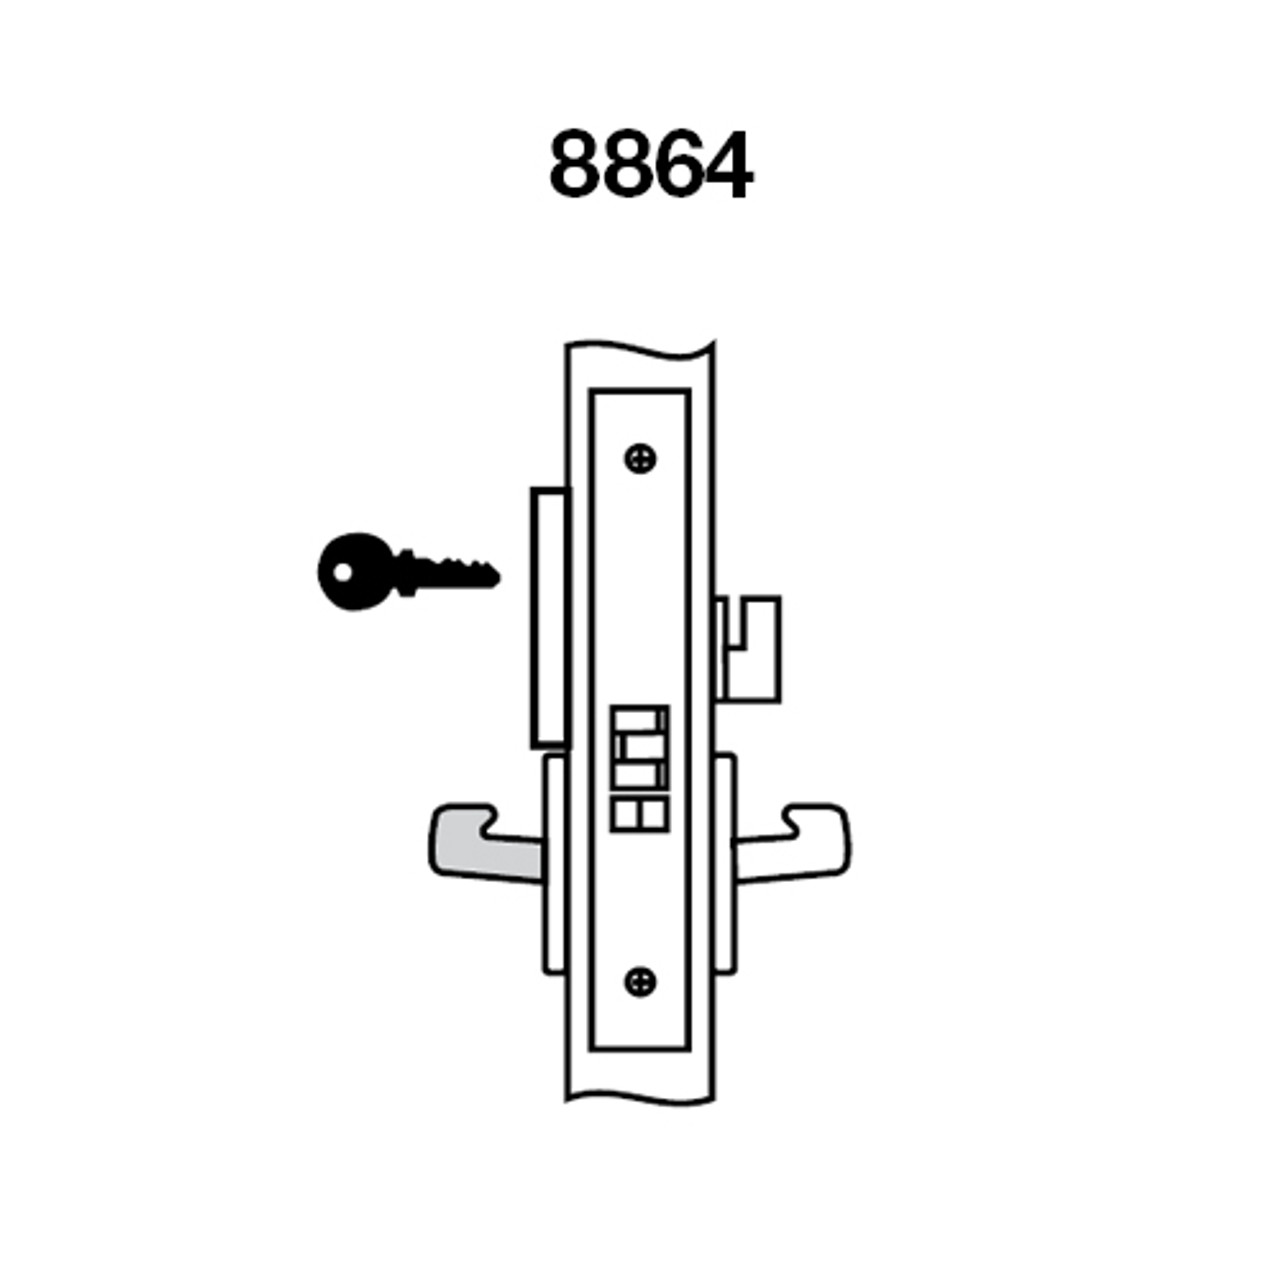 PNR8864FL-619 Yale 8800FL Series Single Cylinder Mortise Bathroom Lock with Indicator with Pinehurst Lever in Satin Nickel